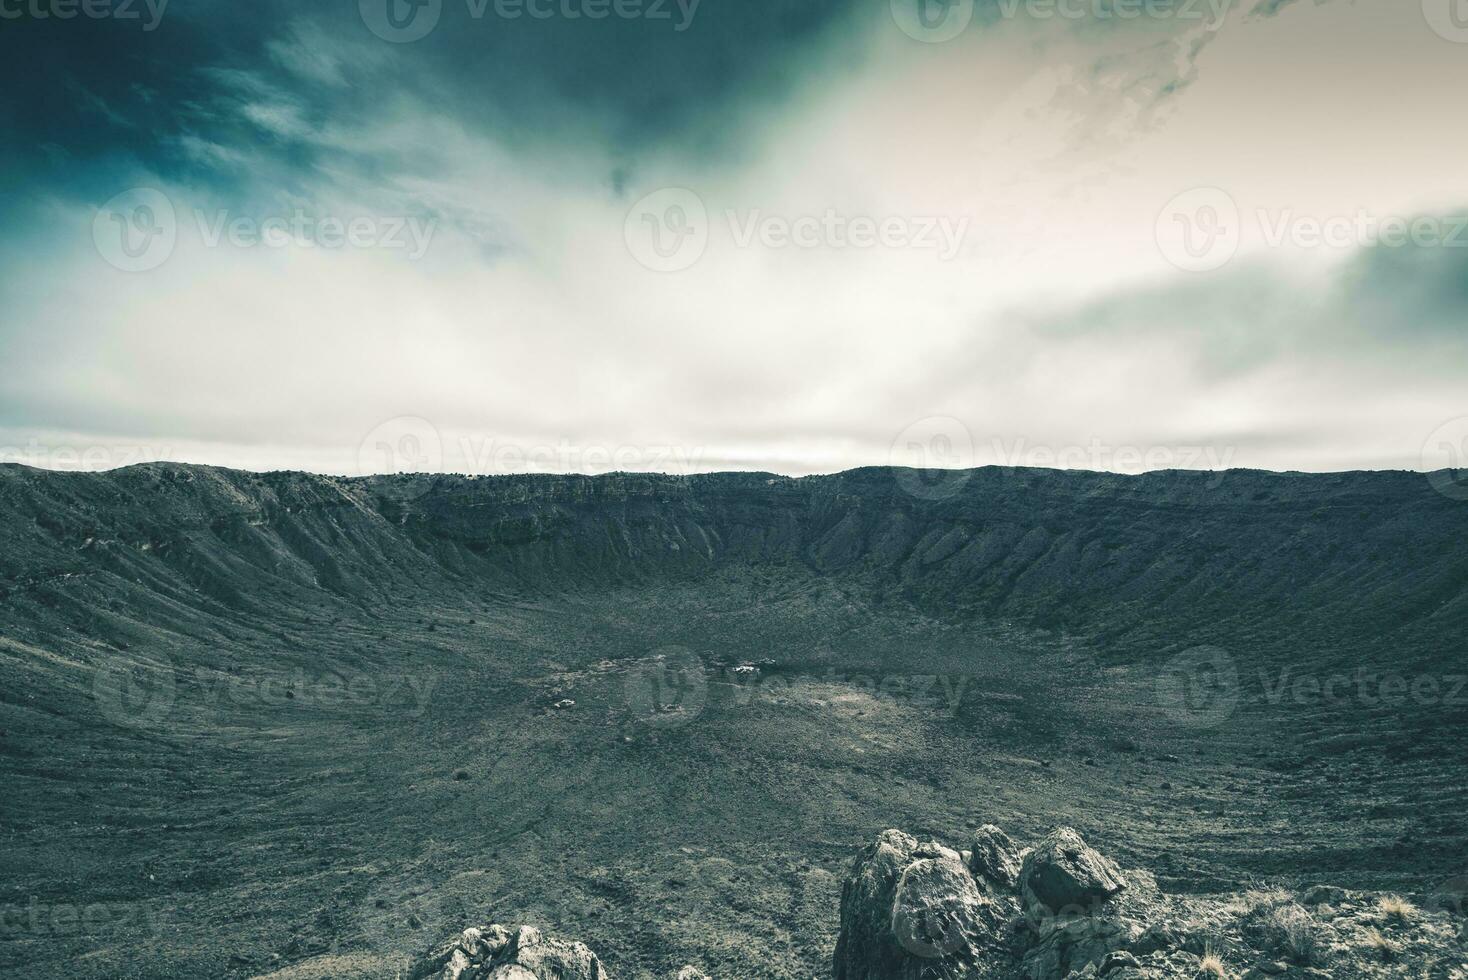 Crater Impact Site photo